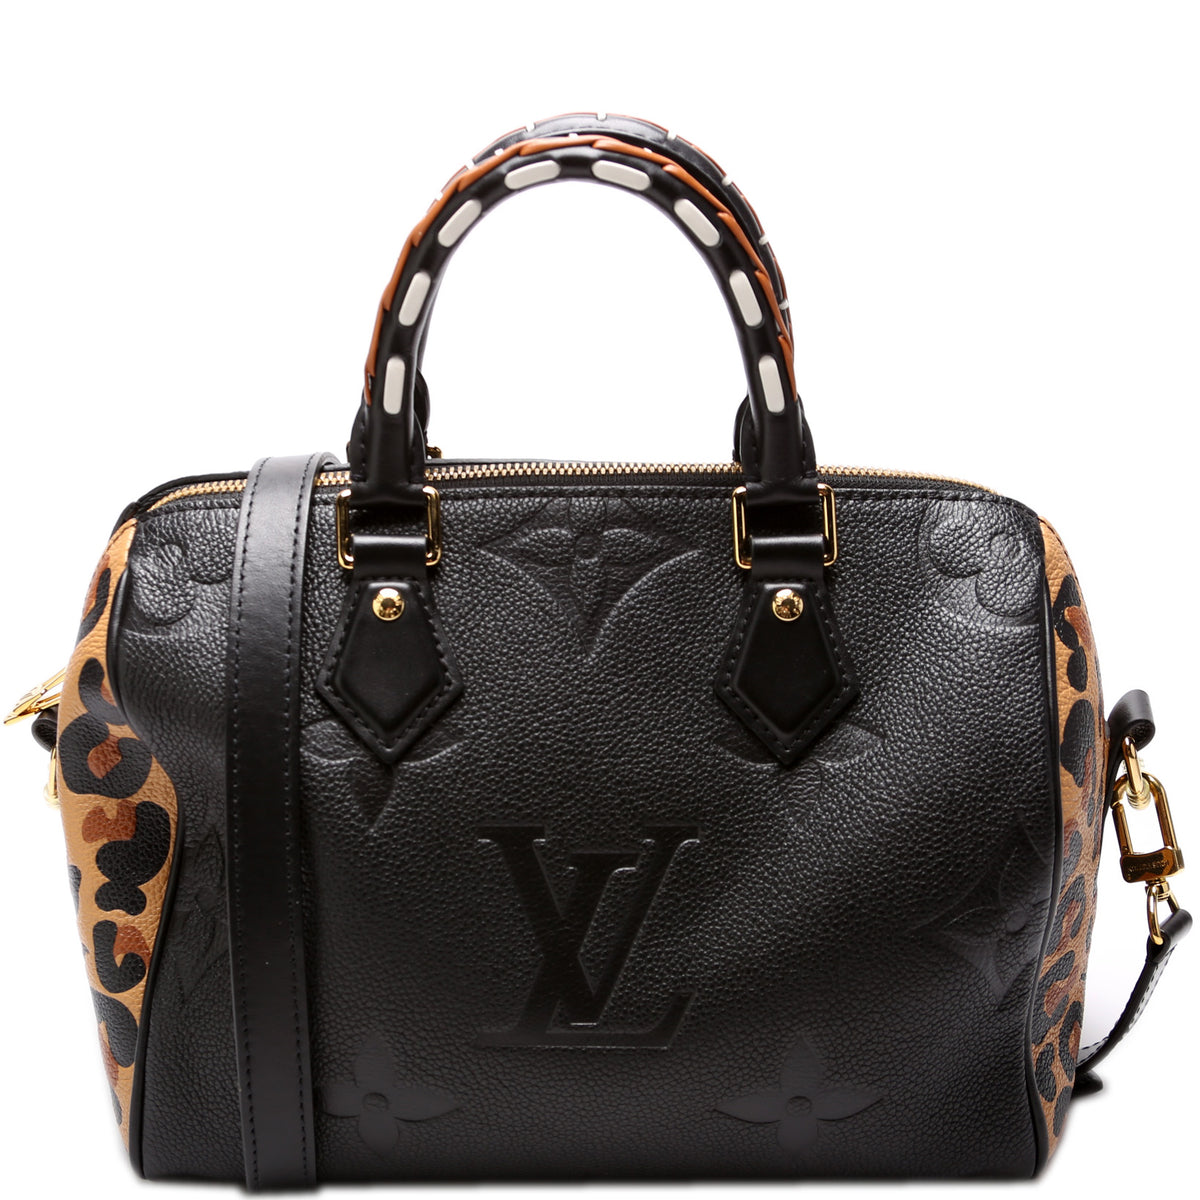 Monogram - Vuitton - louis vuitton speedy 25 wild at heart - Bag